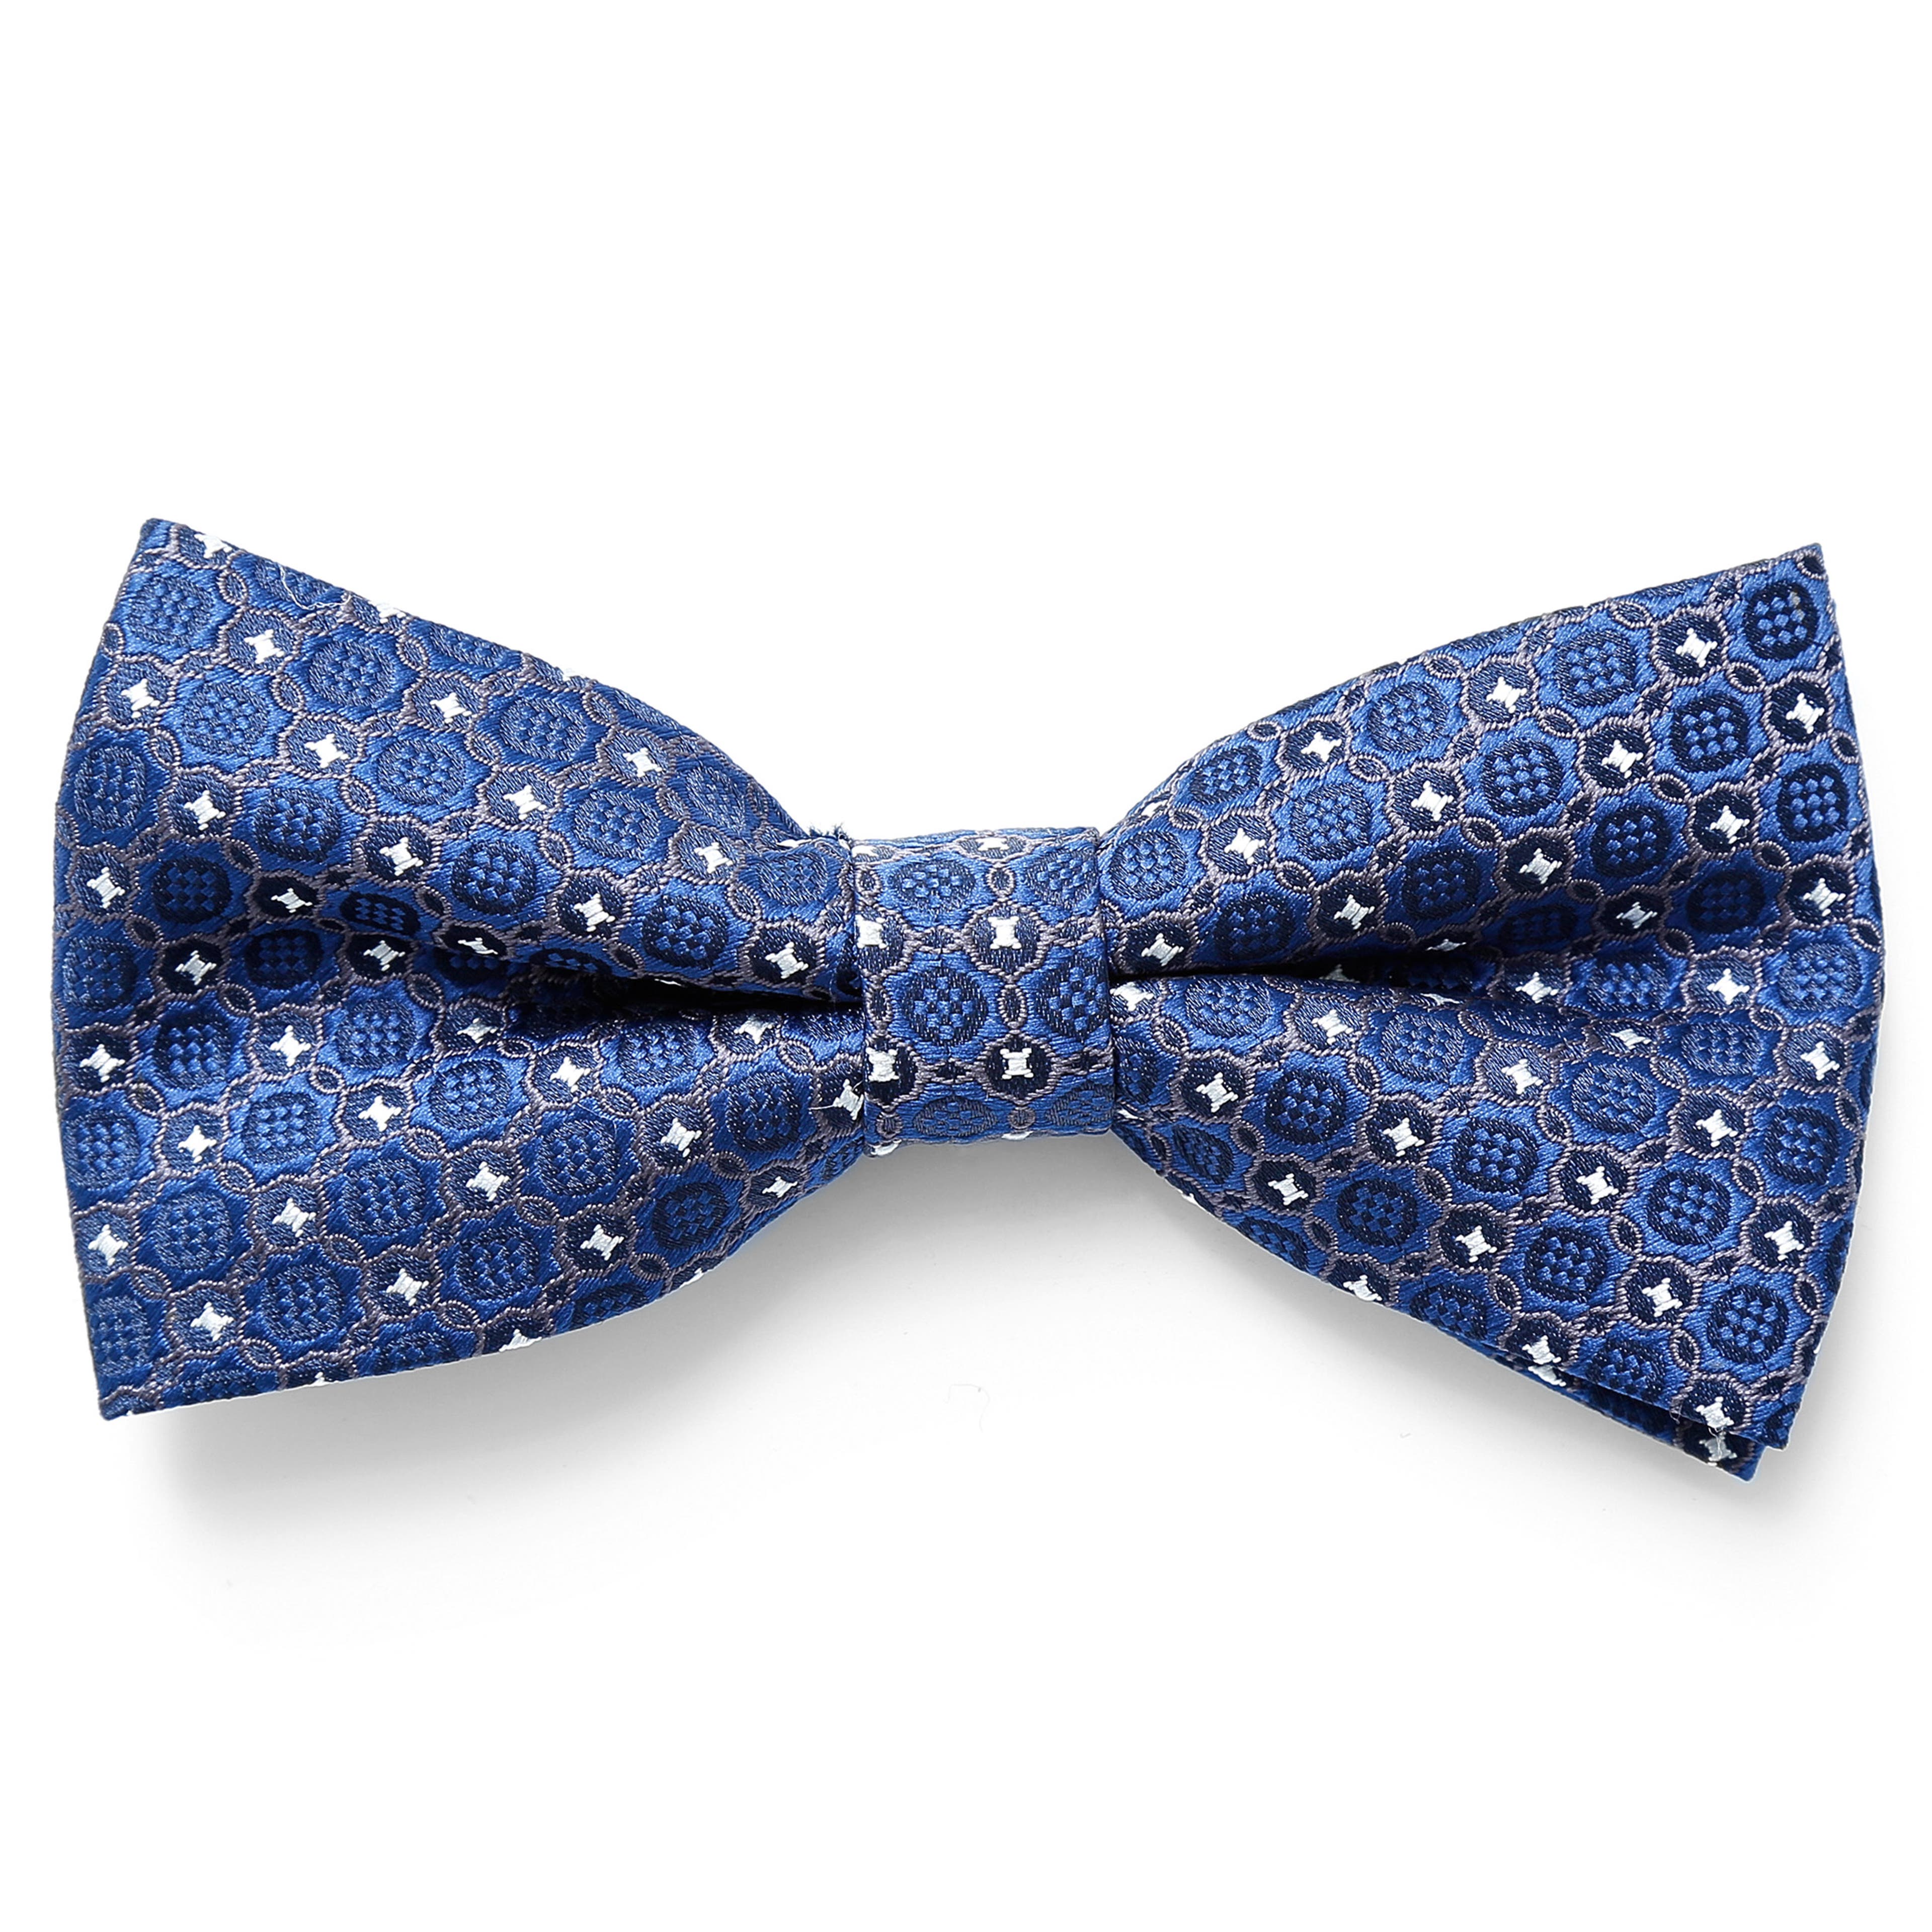 Blue Royal Pre-Tied Bow Tie